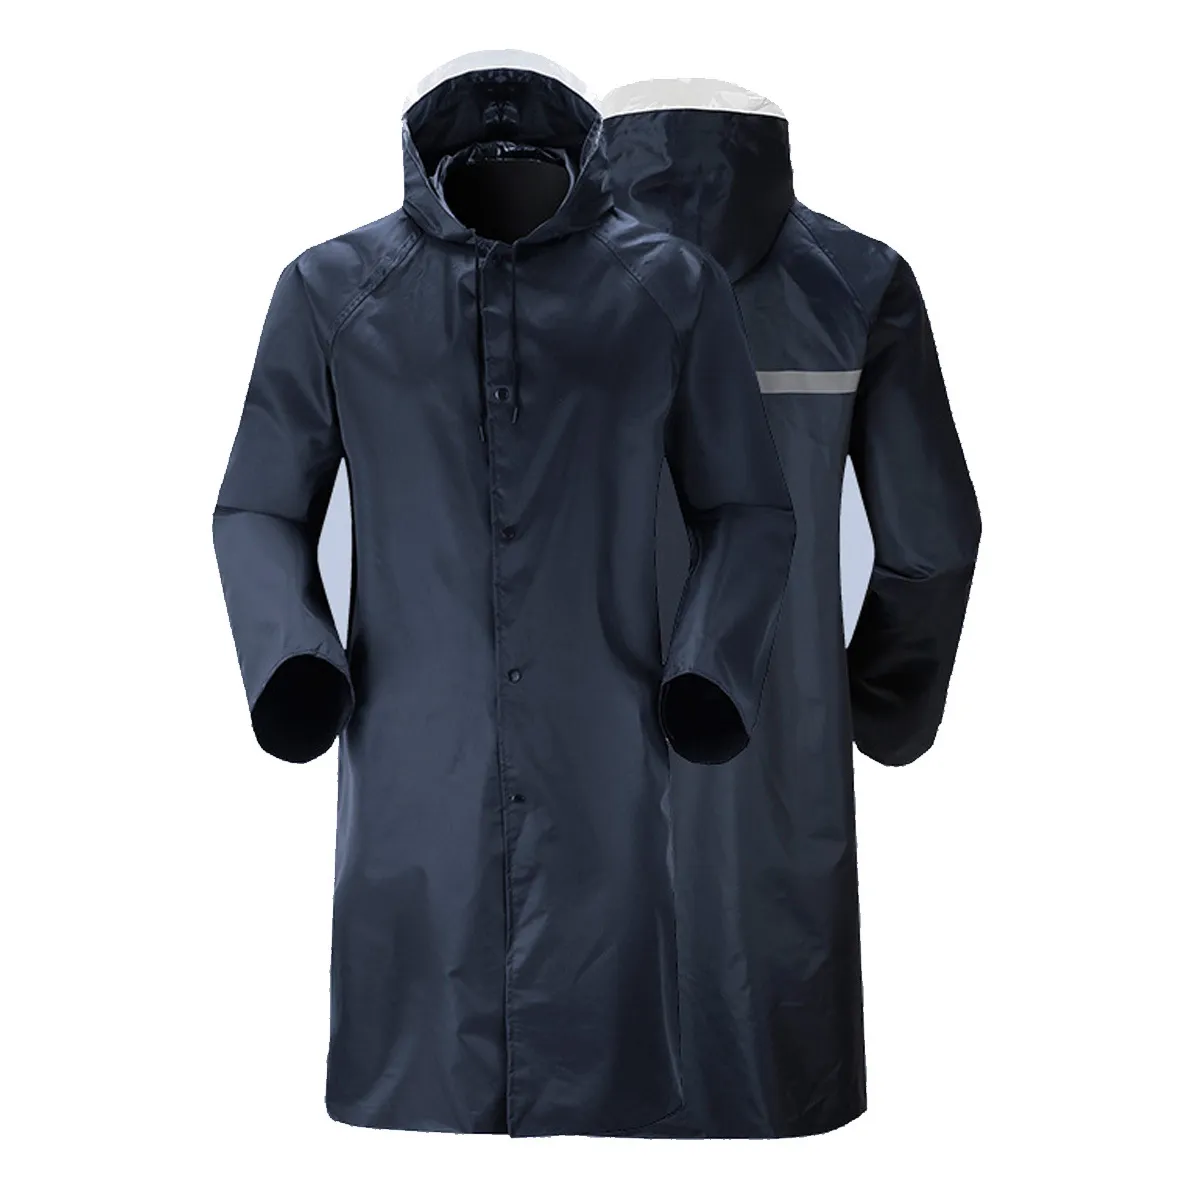 Reflective Strip Waterproof Raincoat For Men  For Men And